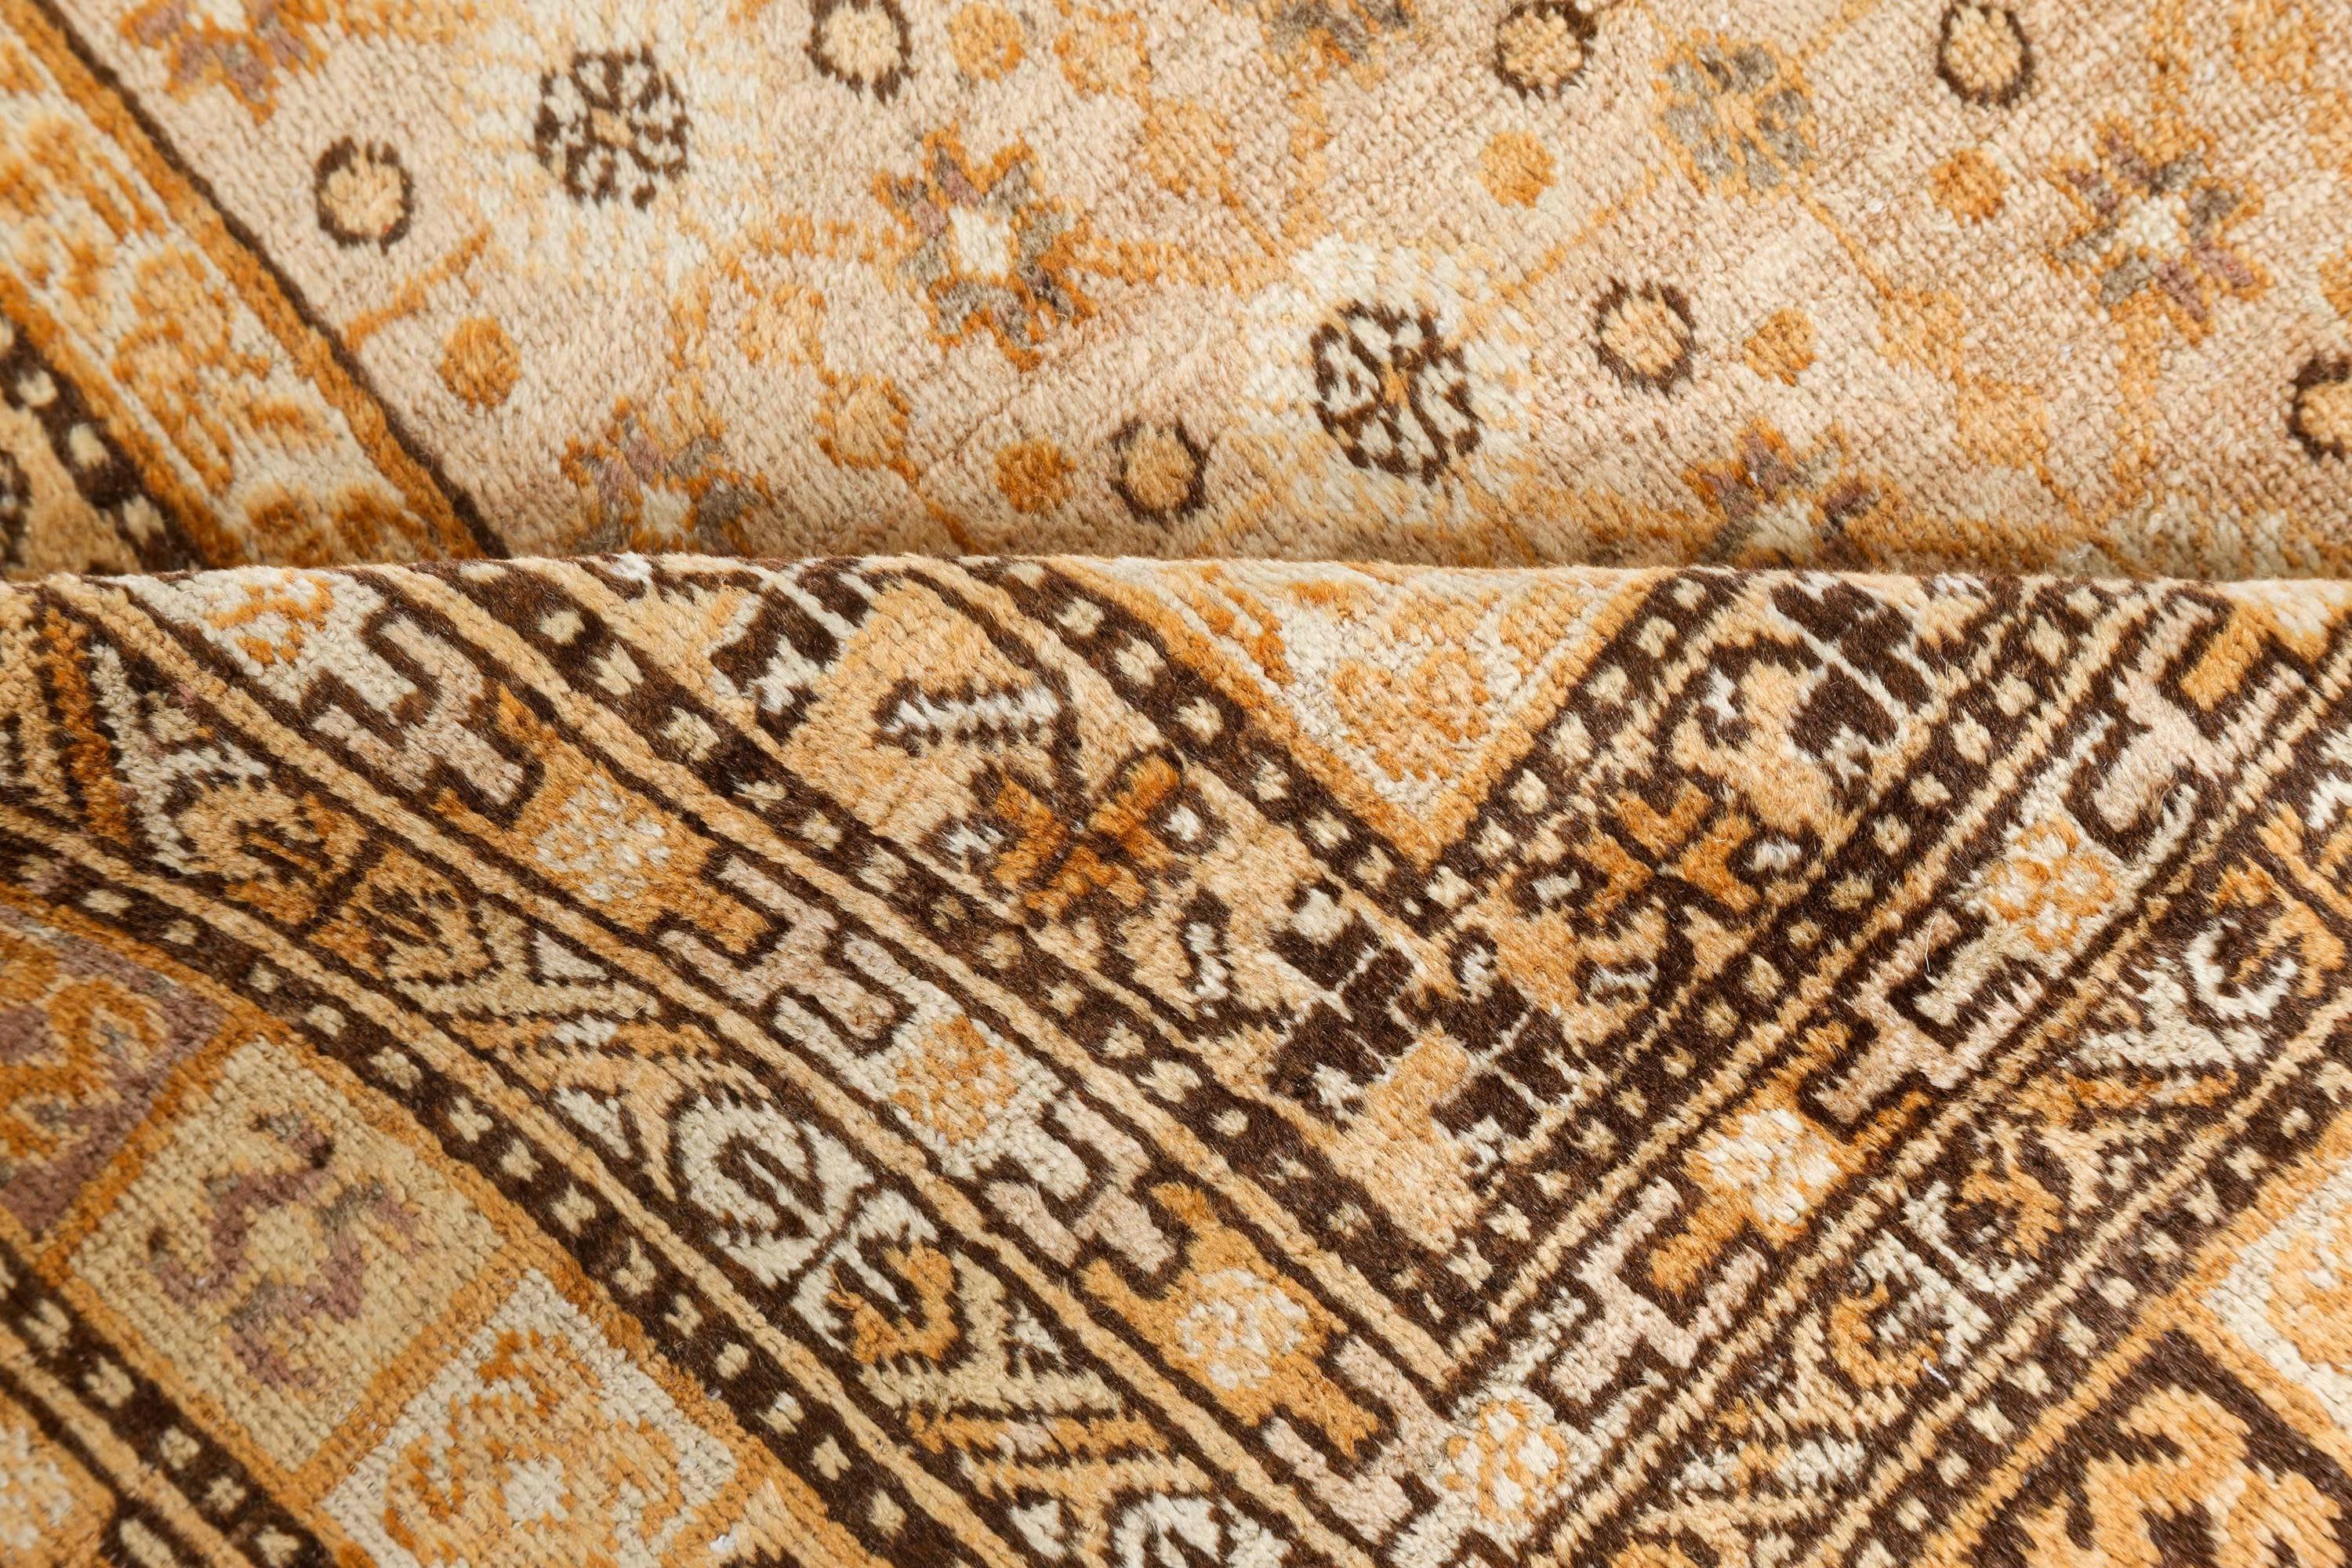 High-quality Samarkand 'Khotan' Handmade Wool Rug
Size: 7'0